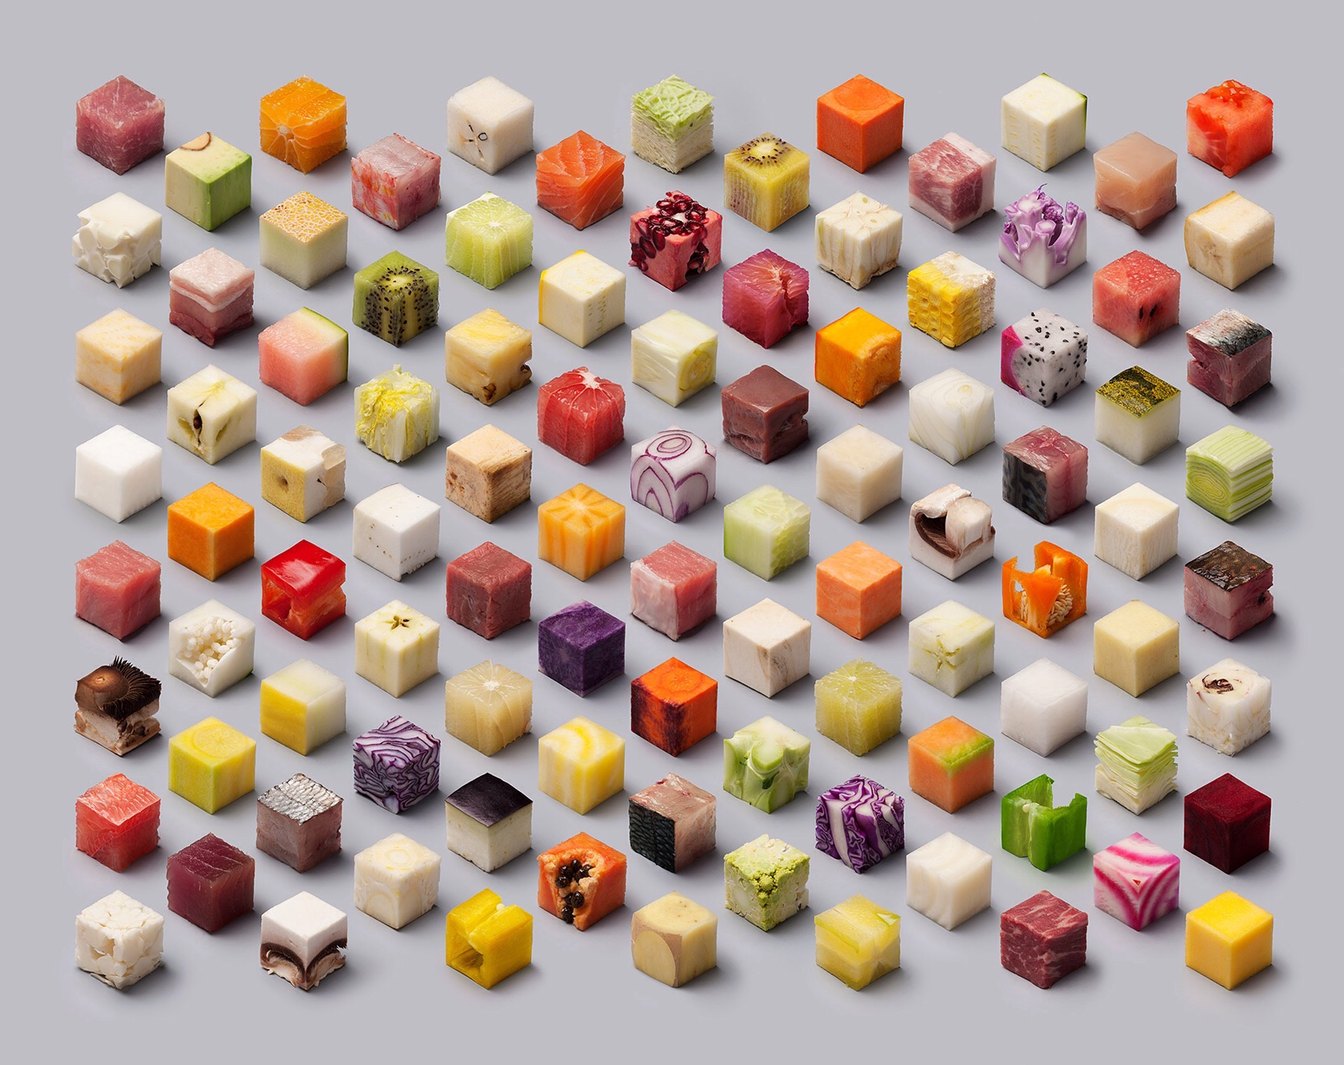 Food cut into perfect cubes - meme